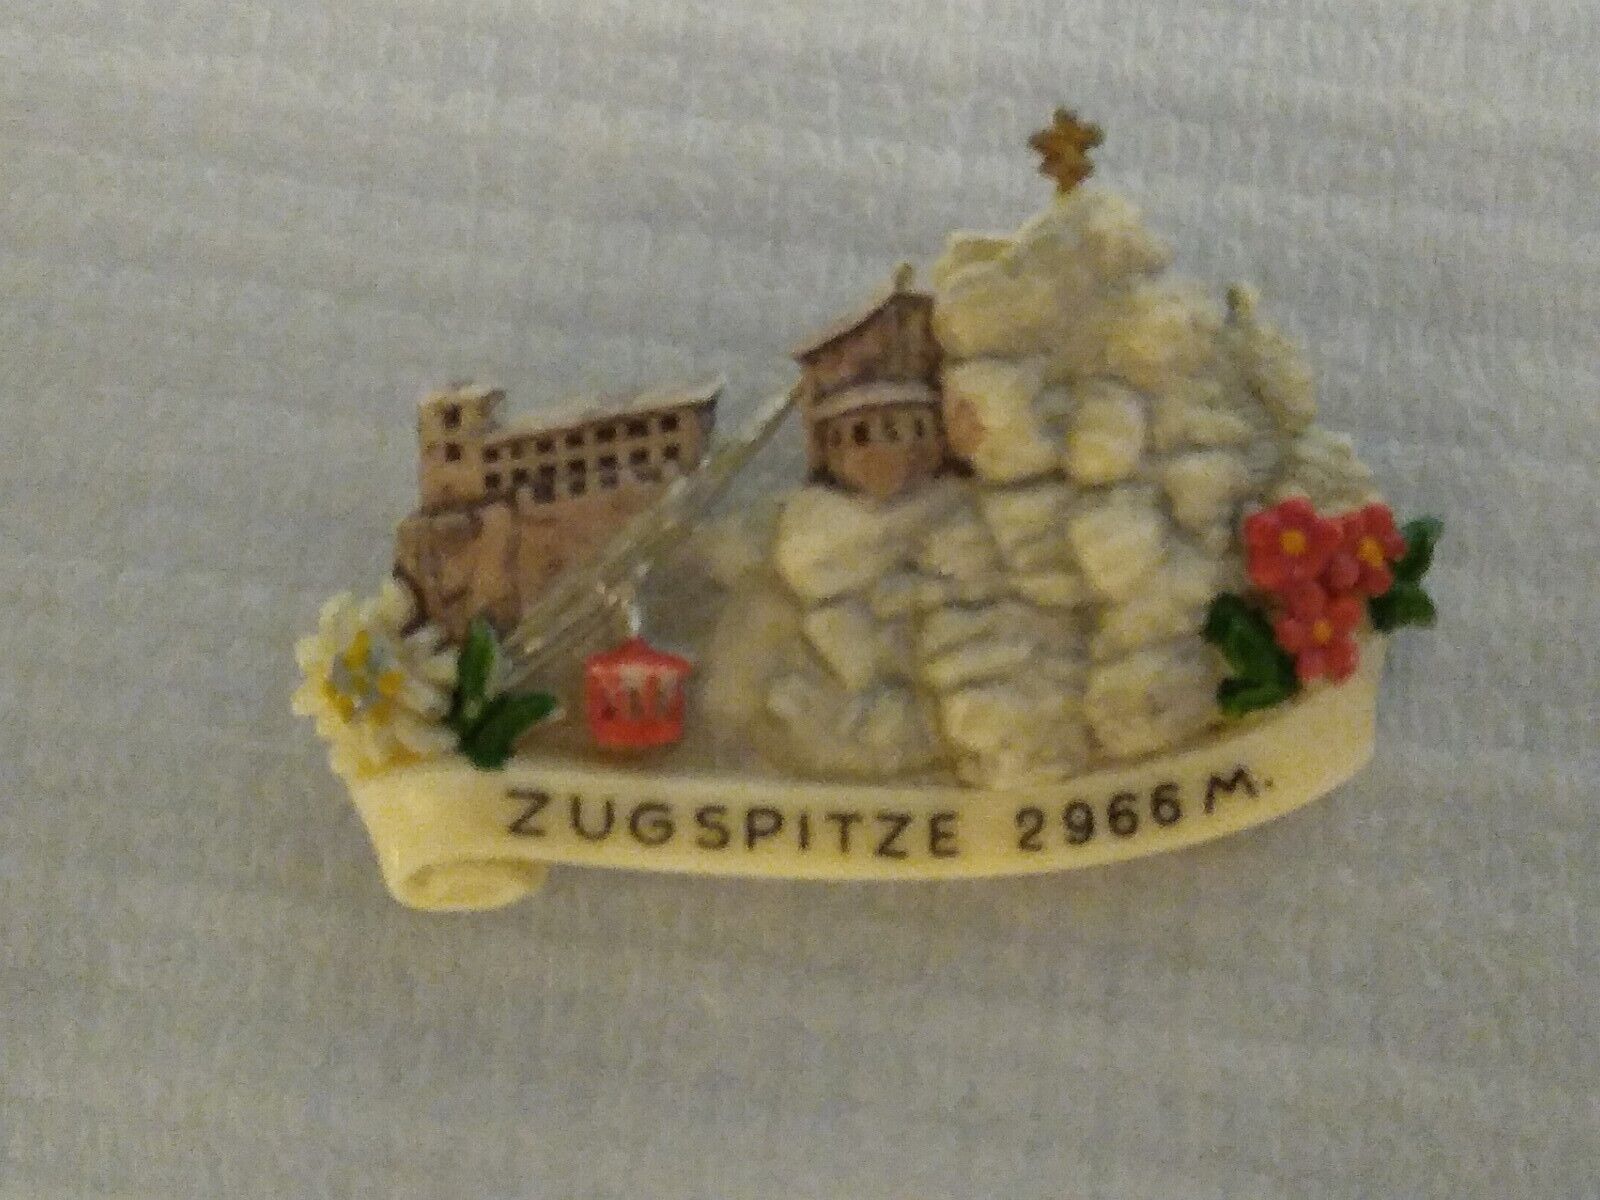 Vintage Zugspitze 2966m Germany Souvenir Lapel Pin Brooch